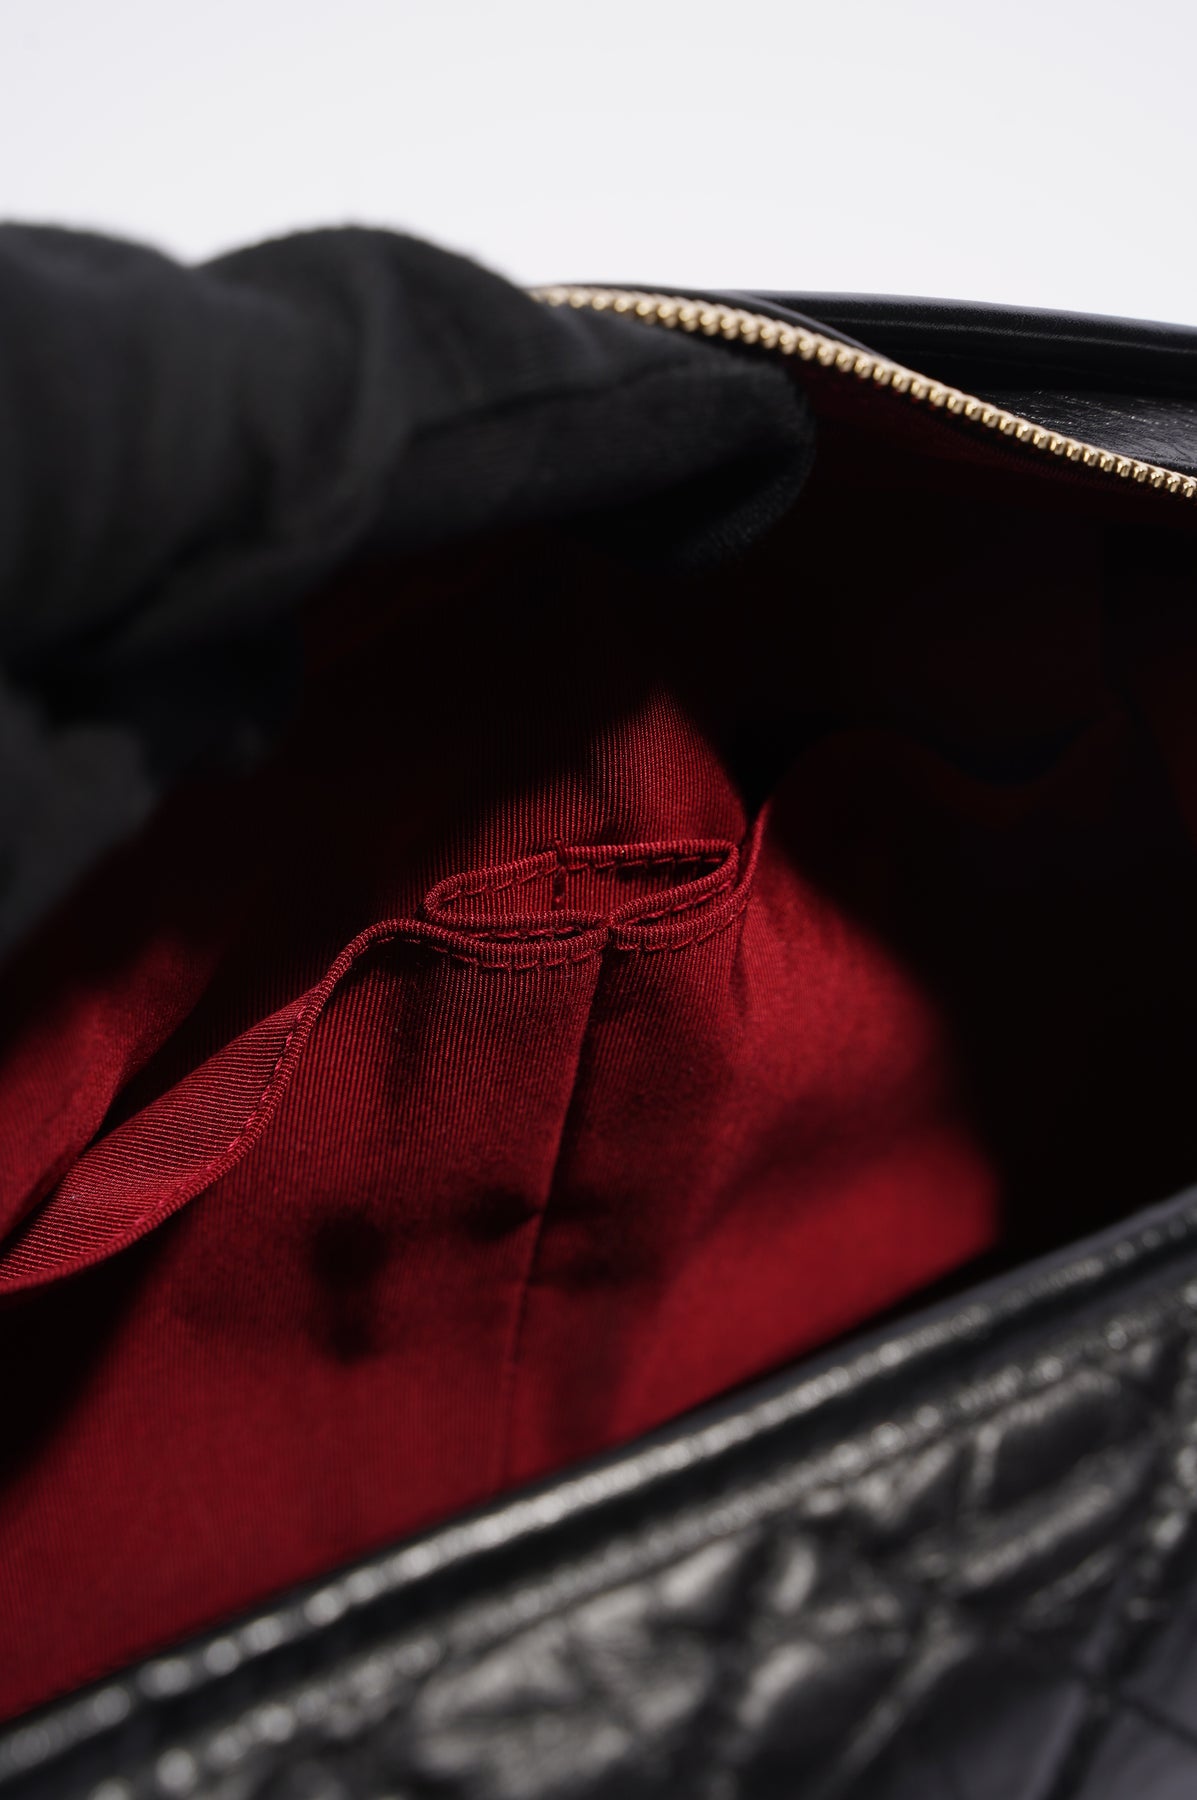 Chanel Womens Gabrielle Hobo Bag Black Lambskin Large – Luxe